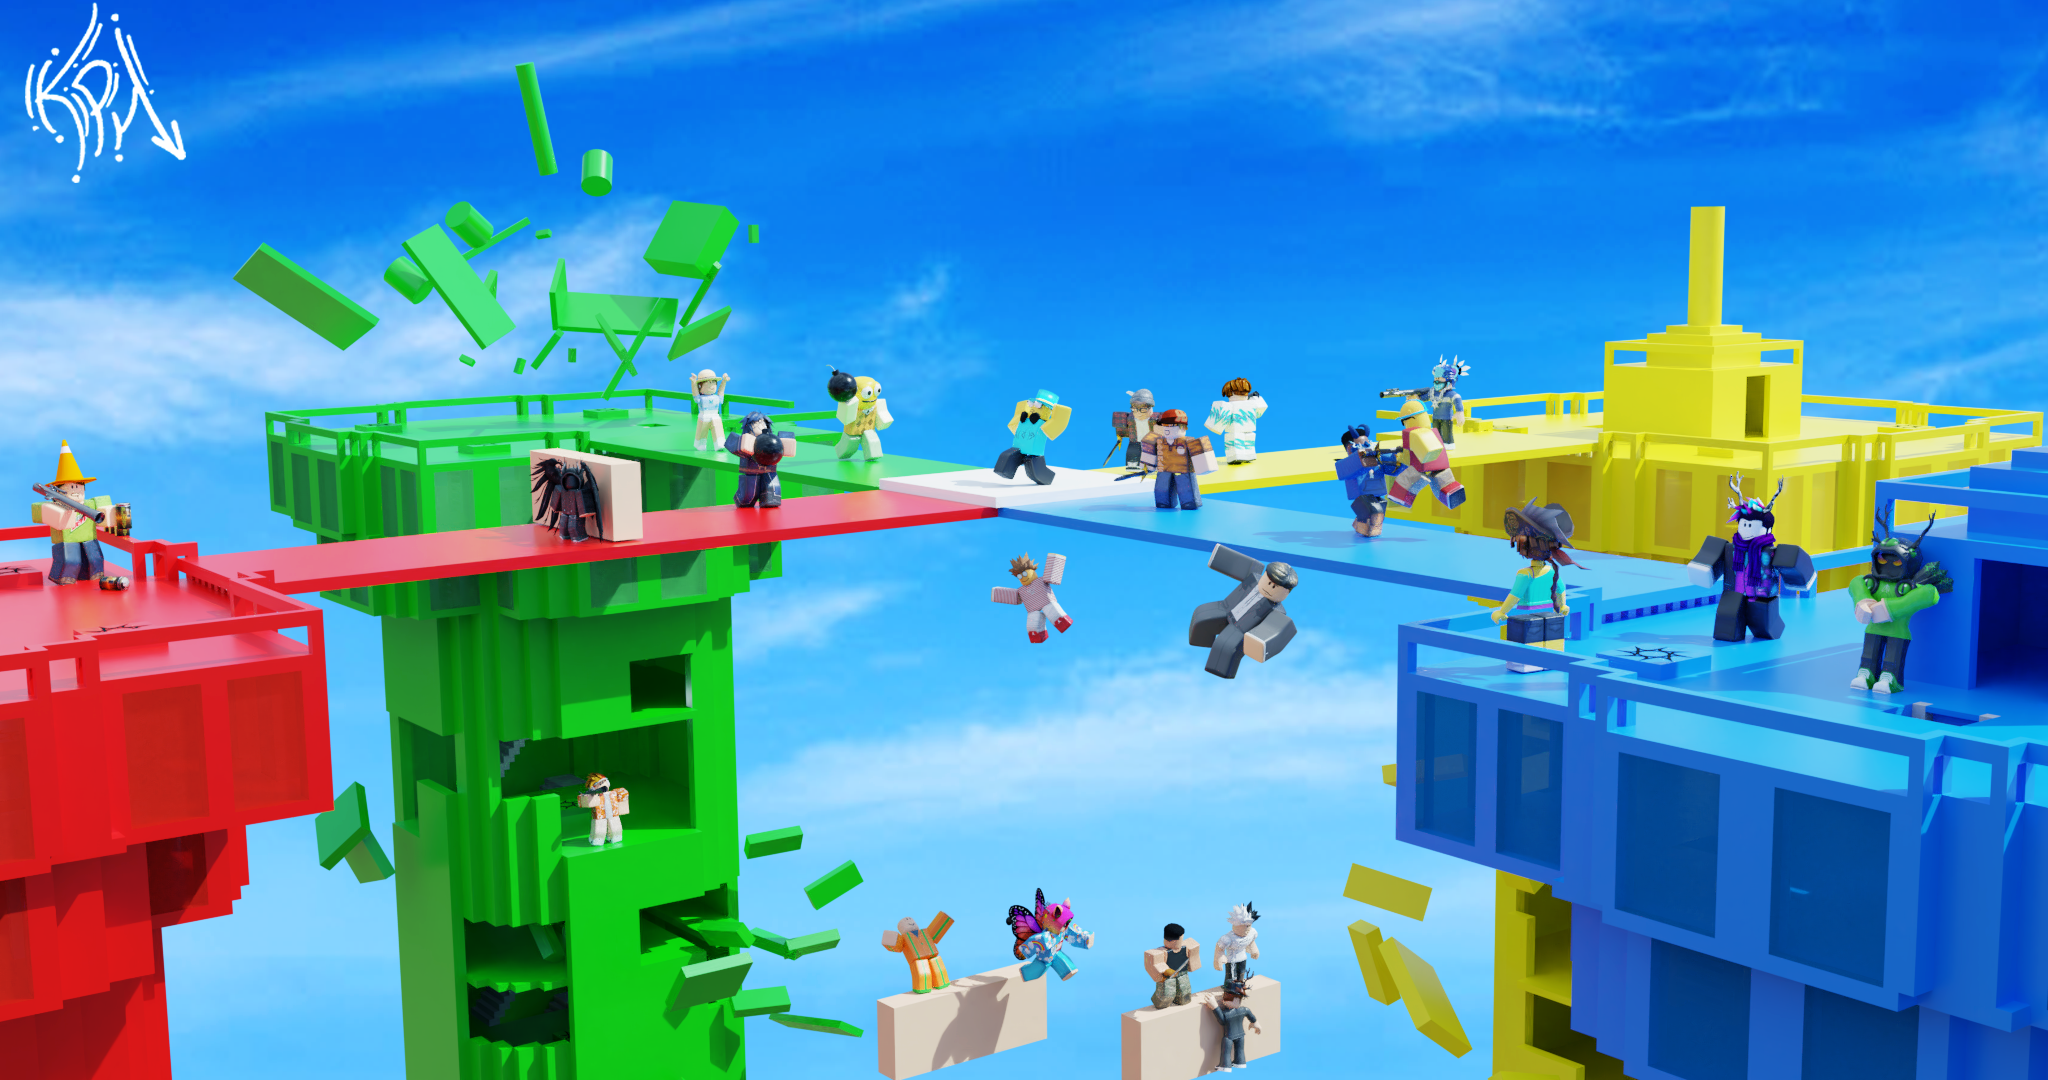 LEGO Roblox: Doomspire Brickbattle